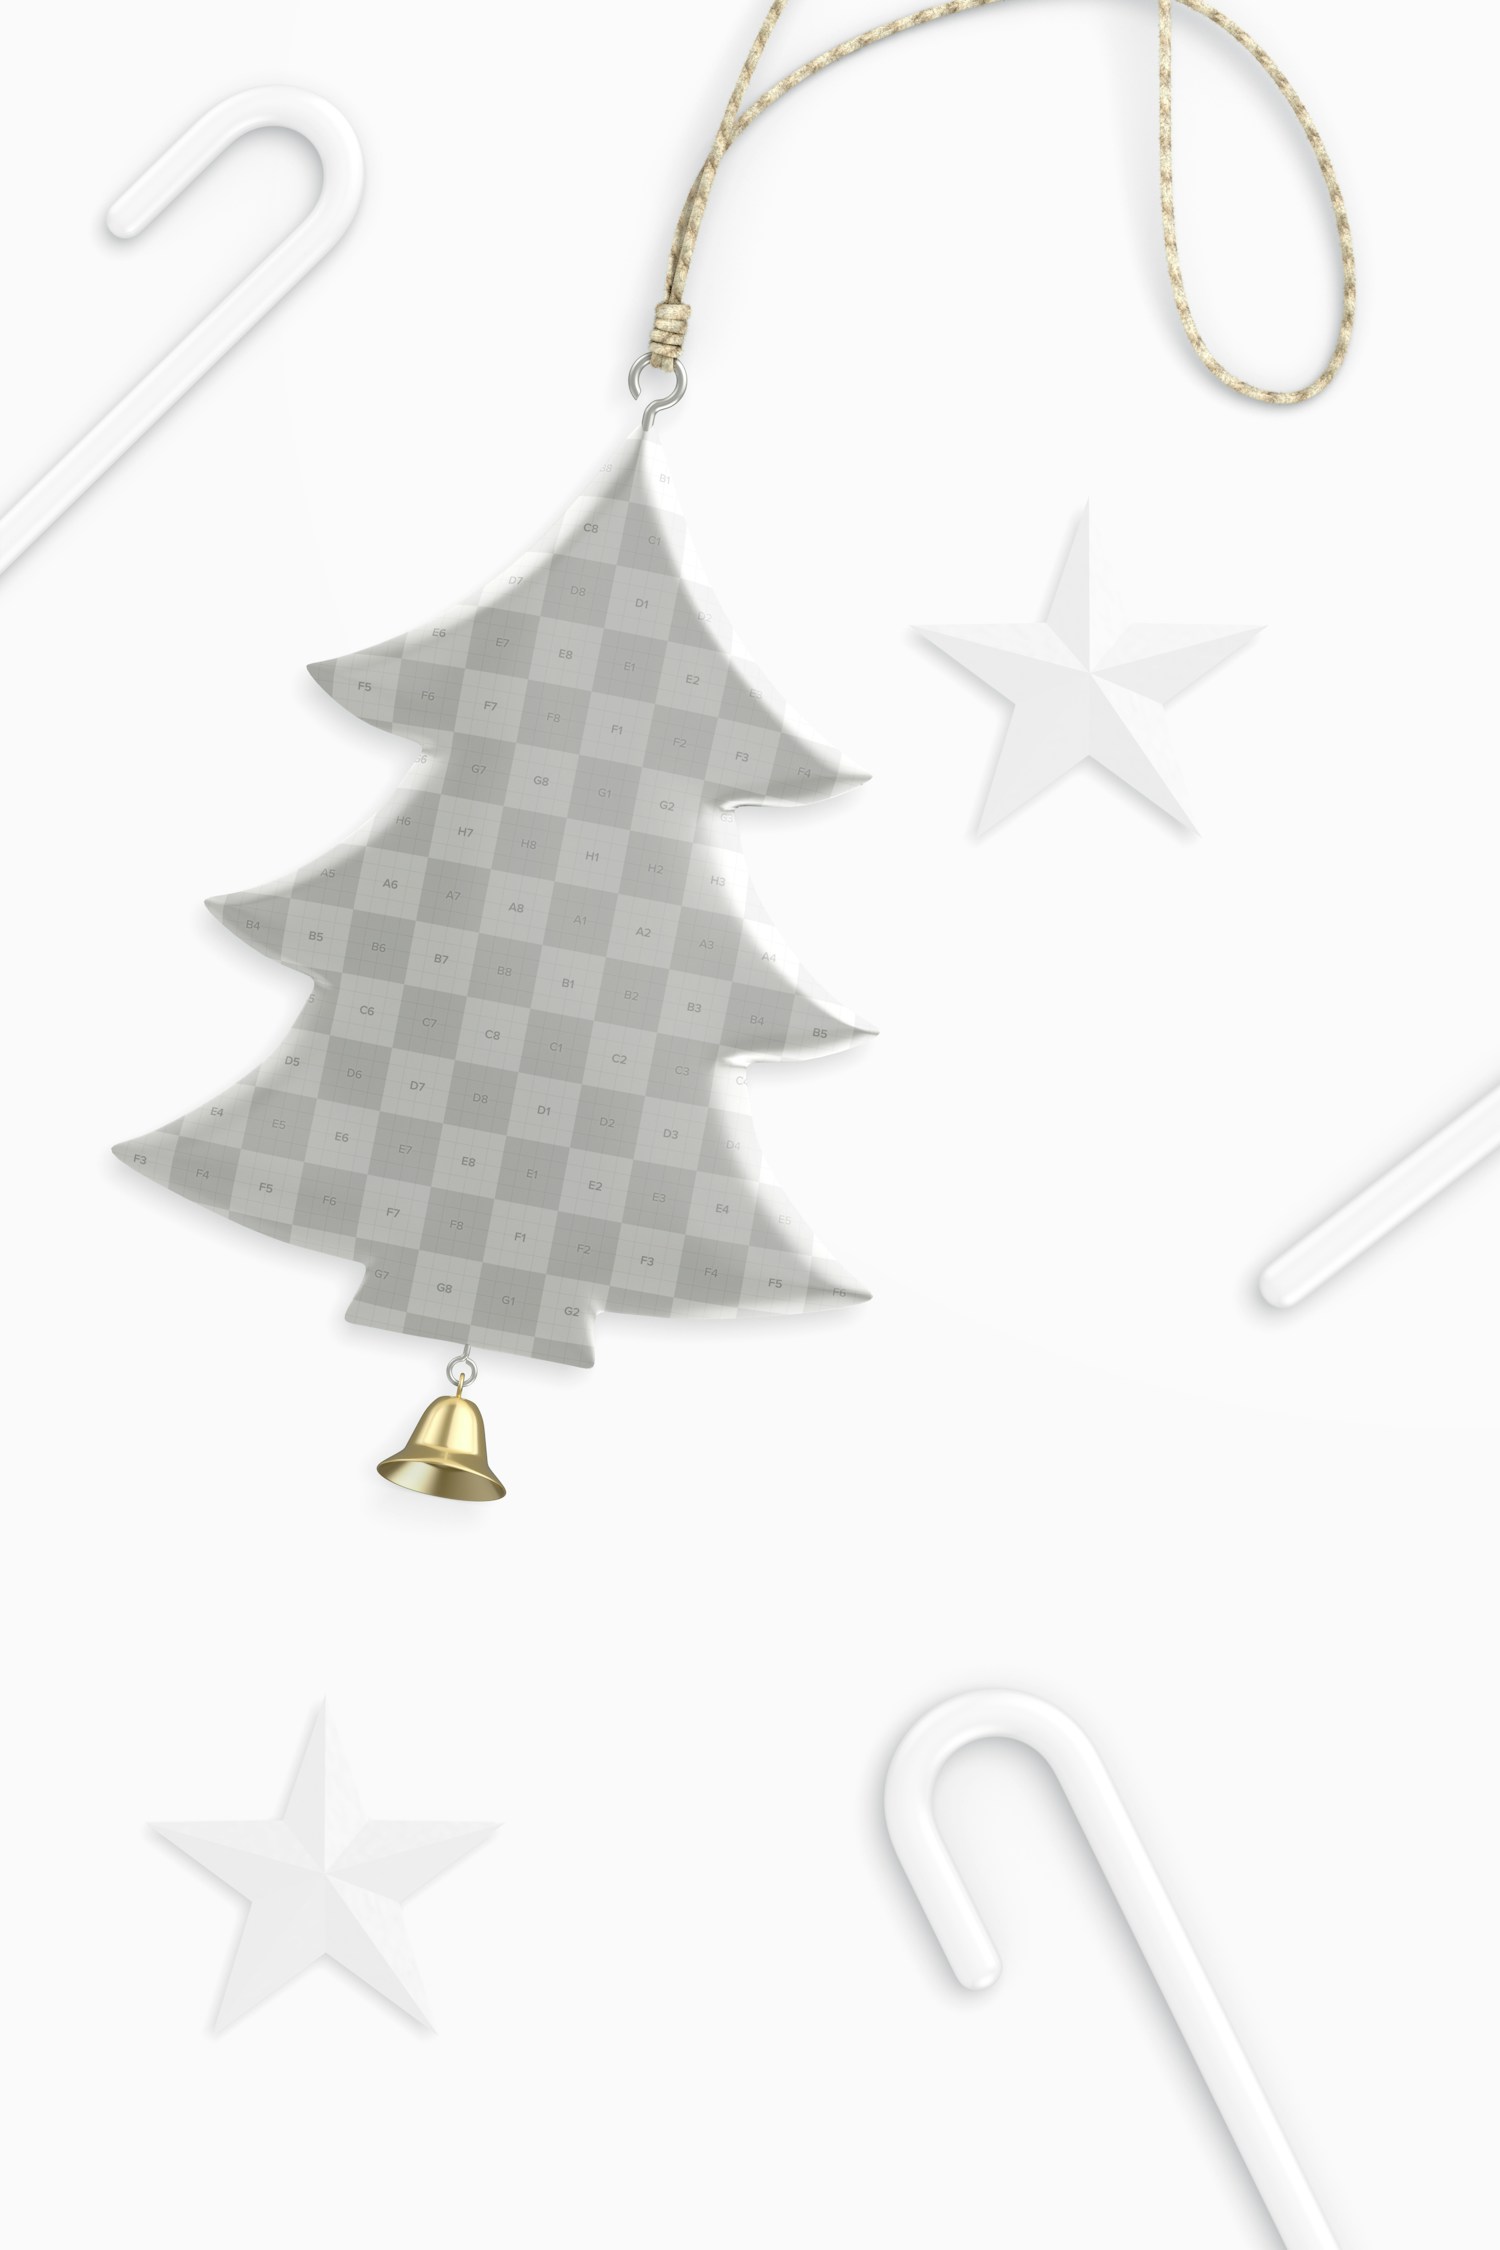 Metallic Christmas Tree Ornament Mockup, Top View